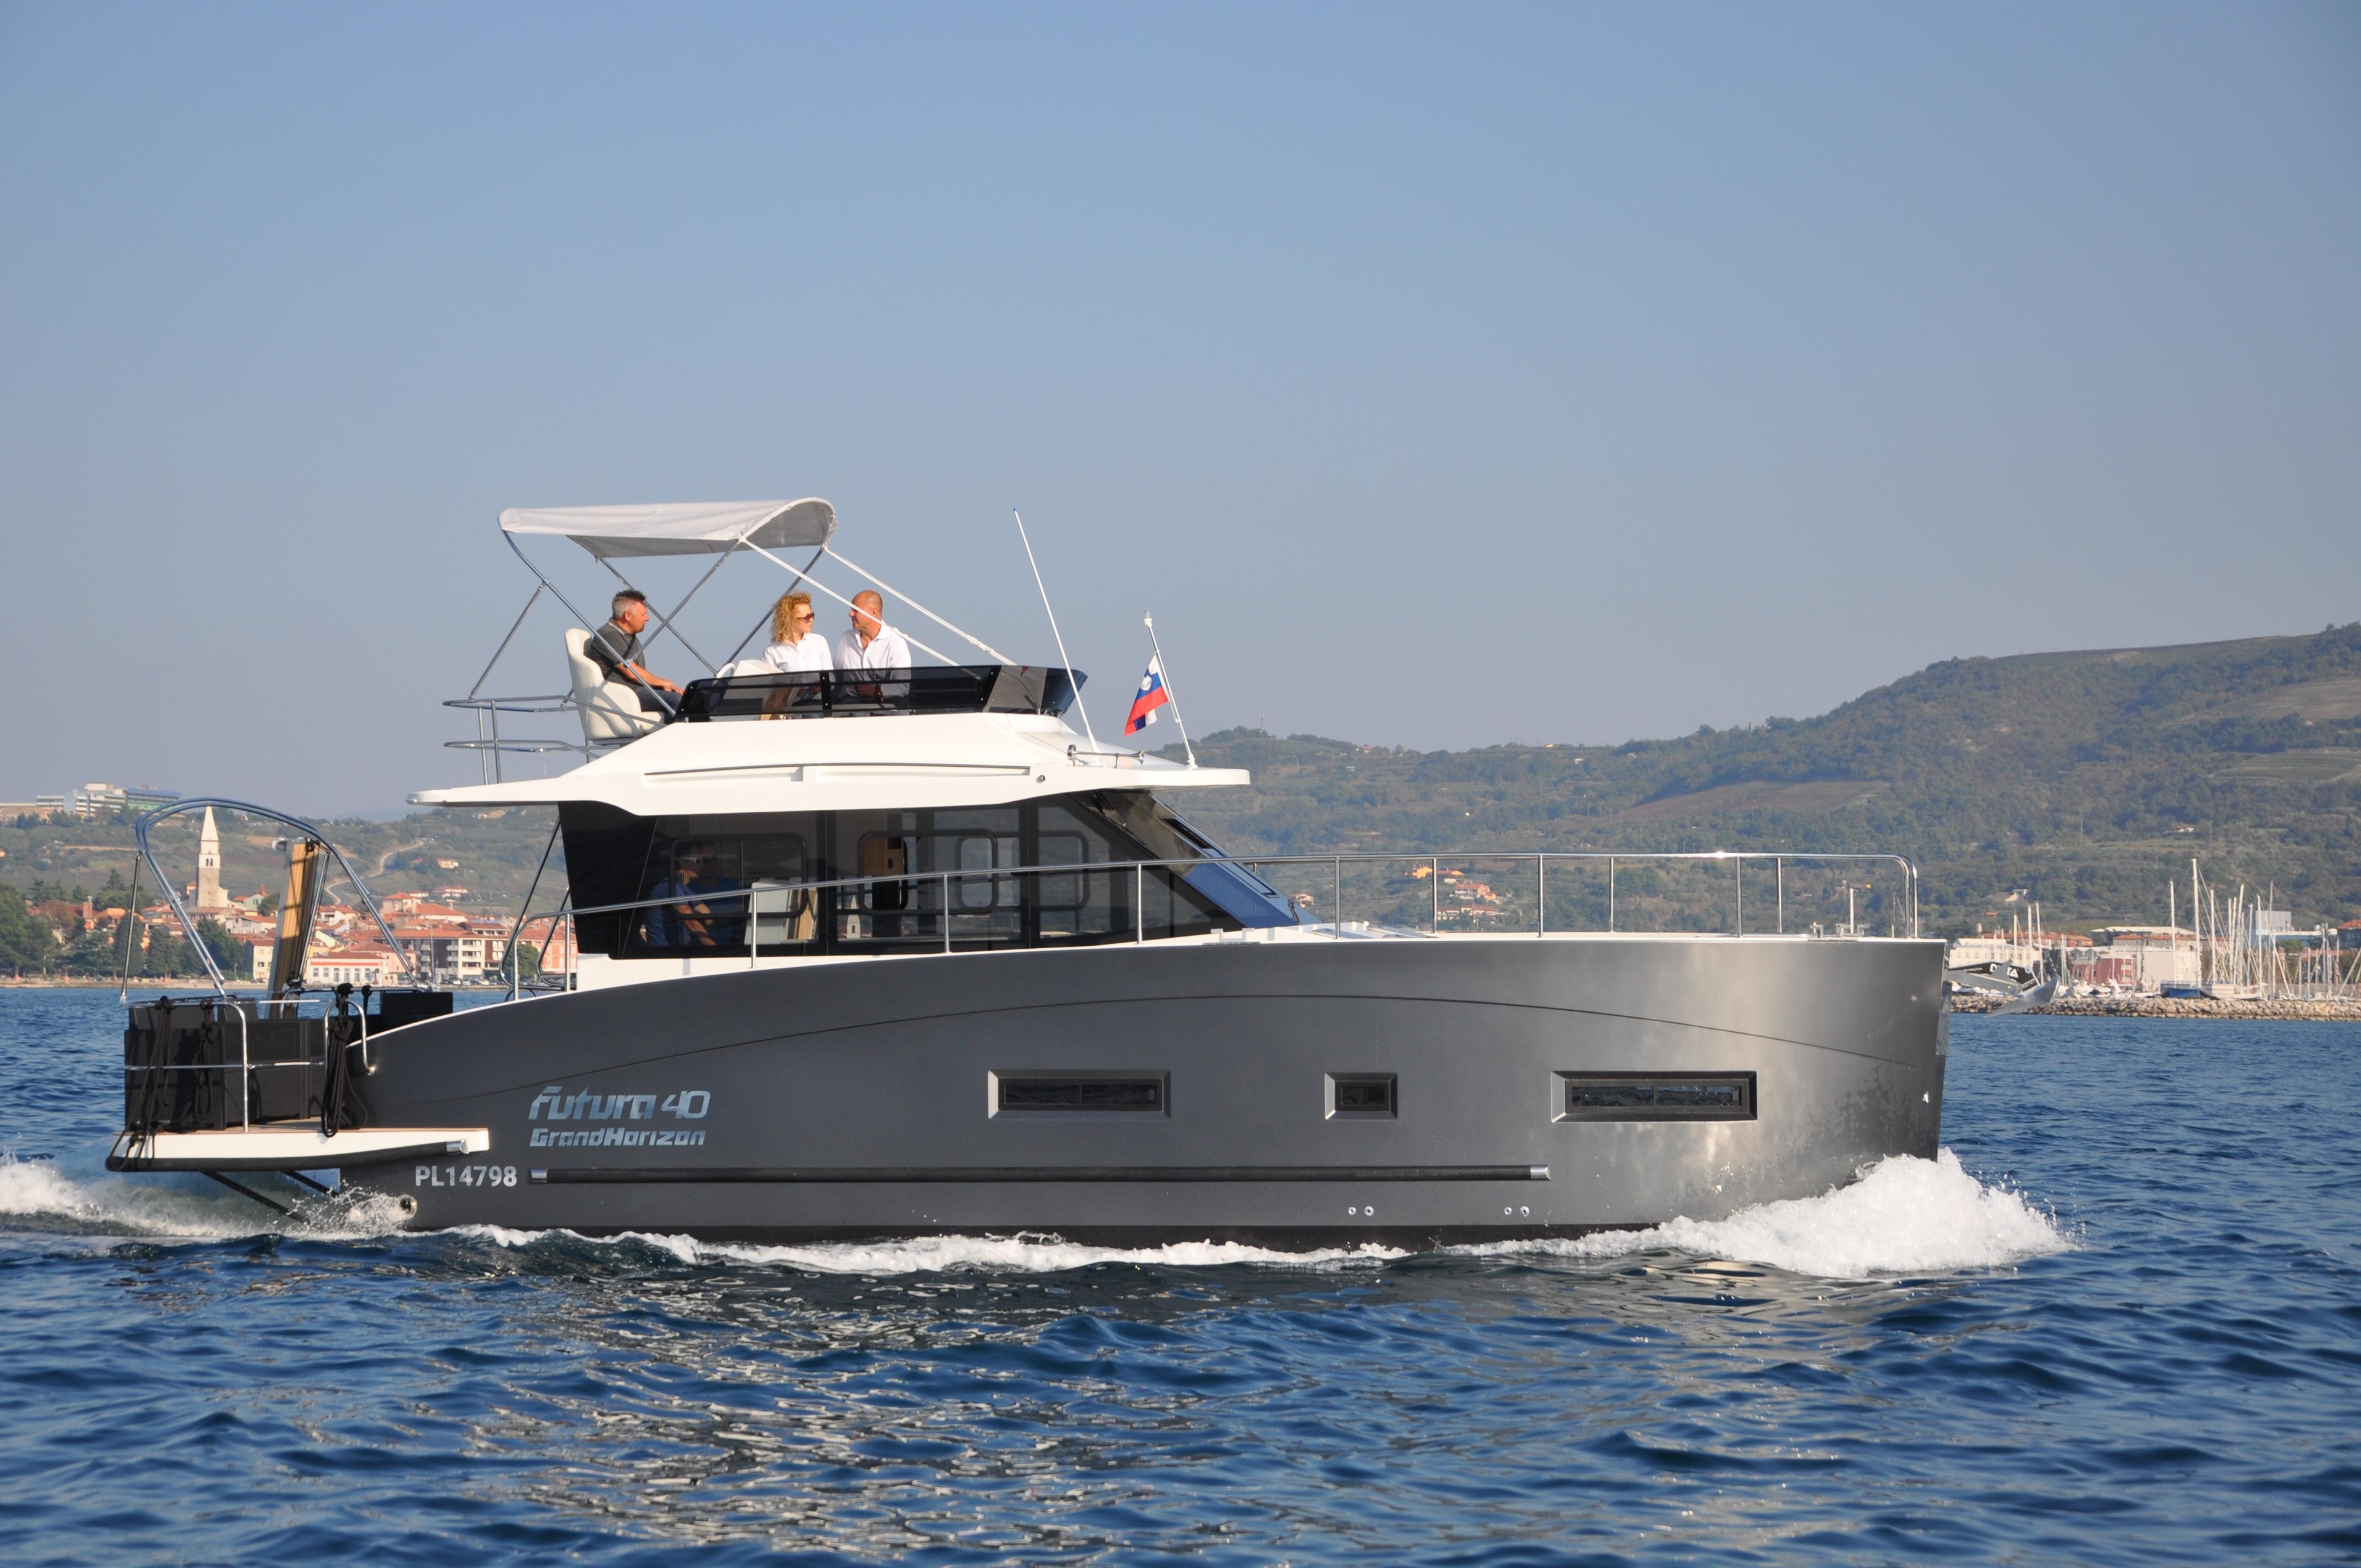 2020 Cobra Performance Boats Futura 40 Grand Horizon